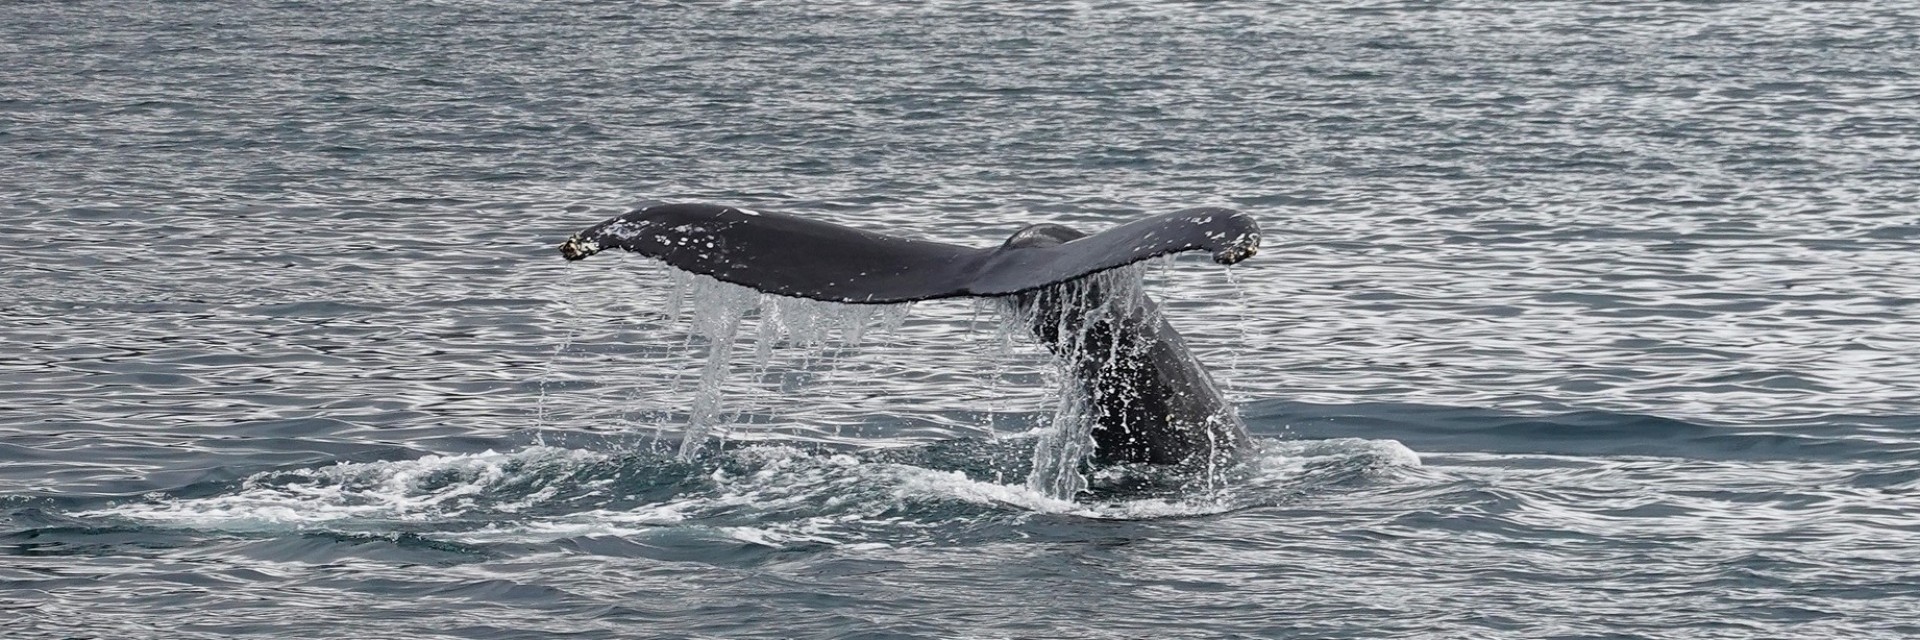 Husavik Whale watching